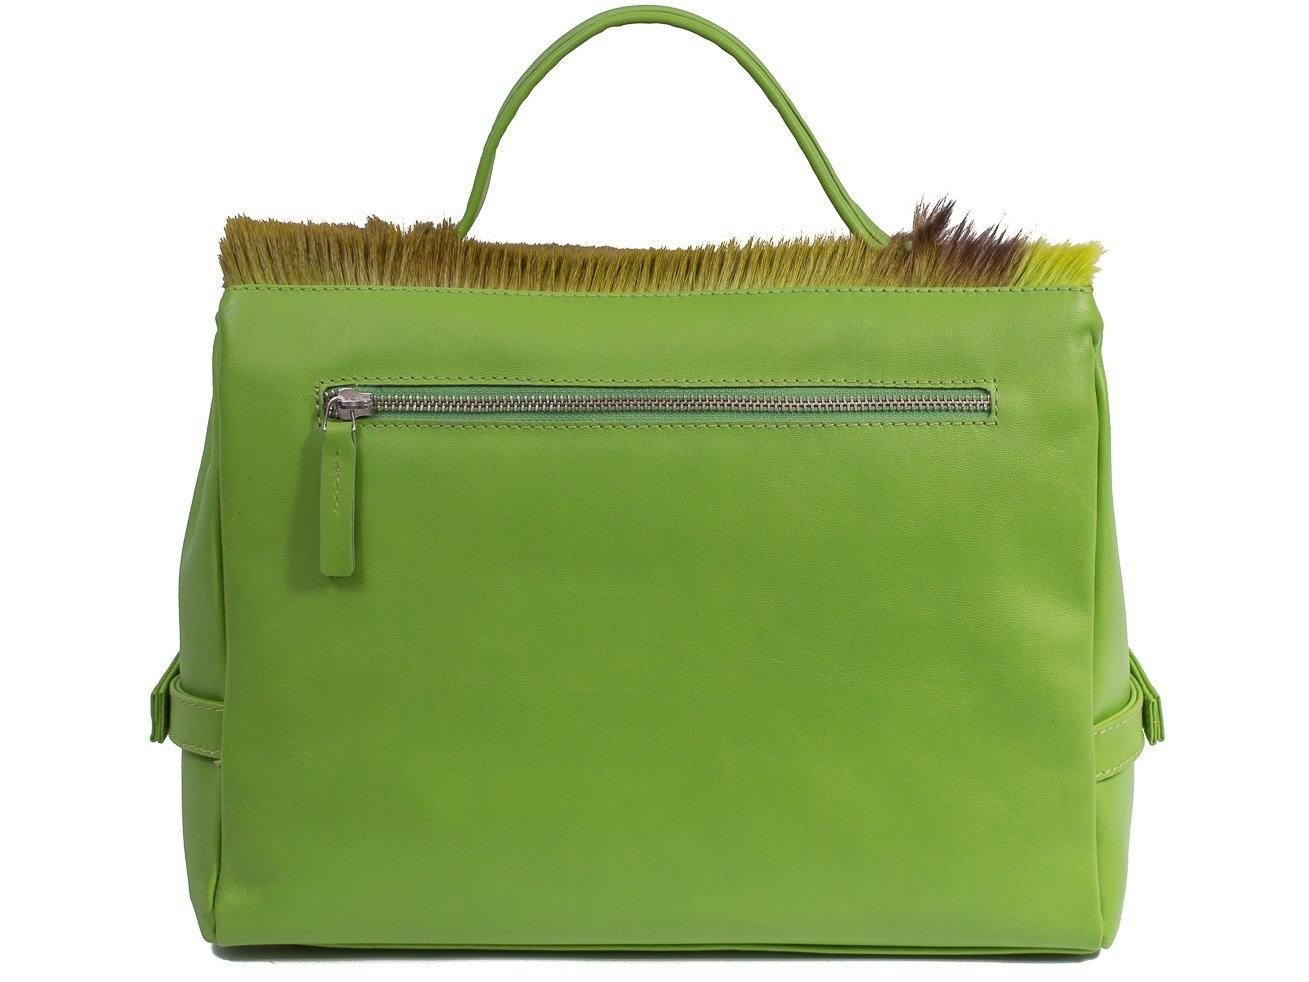 sherene melinda springbok hair-on-hide lime green leather smith tote bag Stripe back